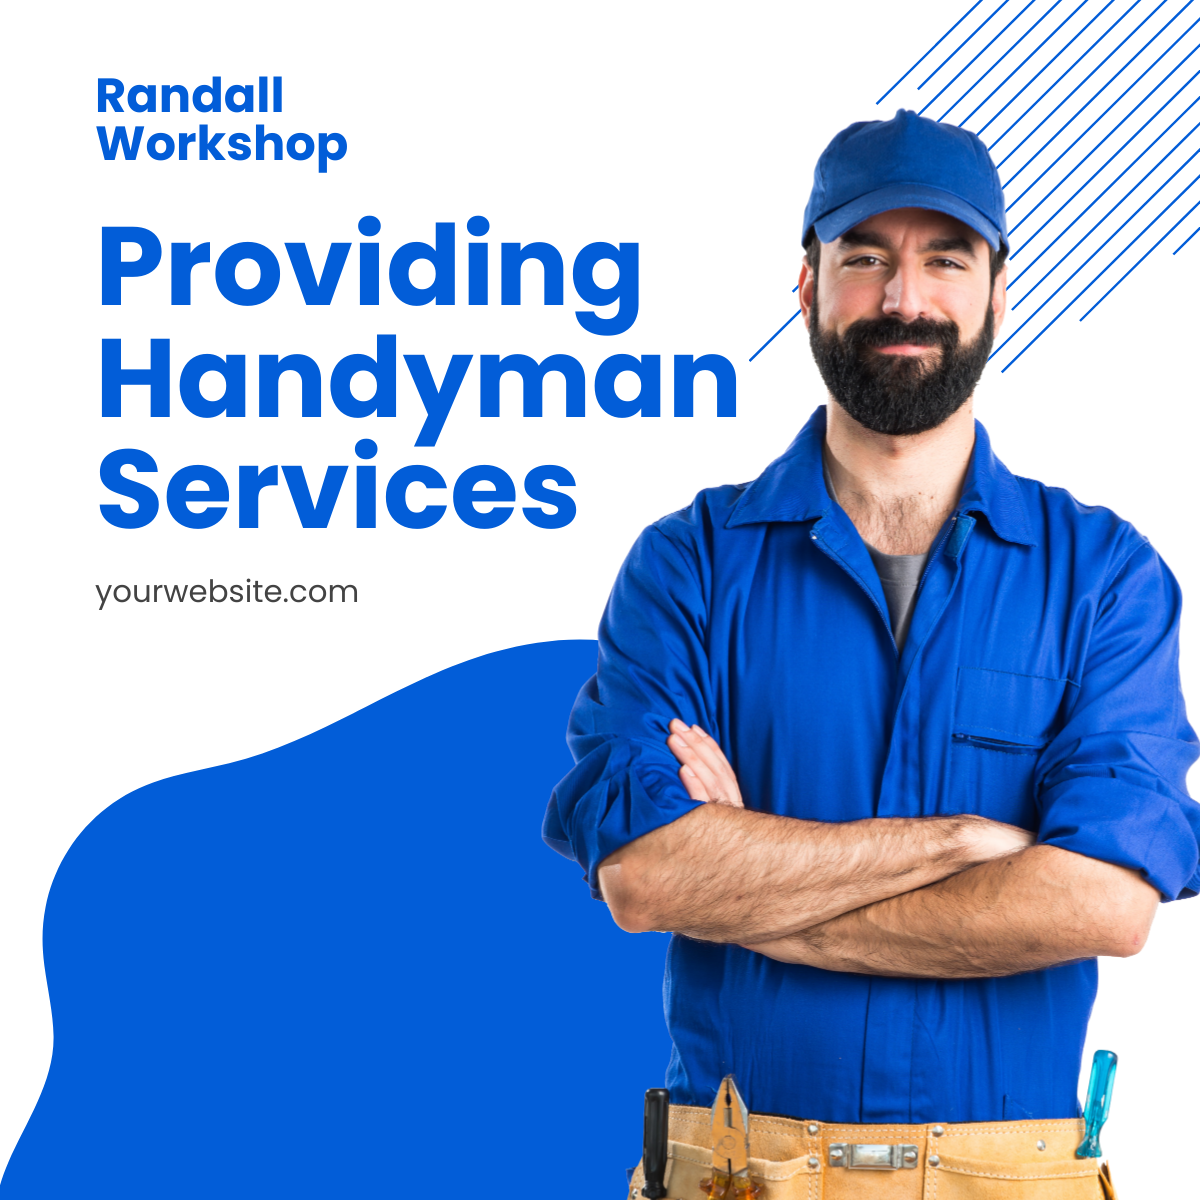 Professional Handyman Services Linkedin Post Template